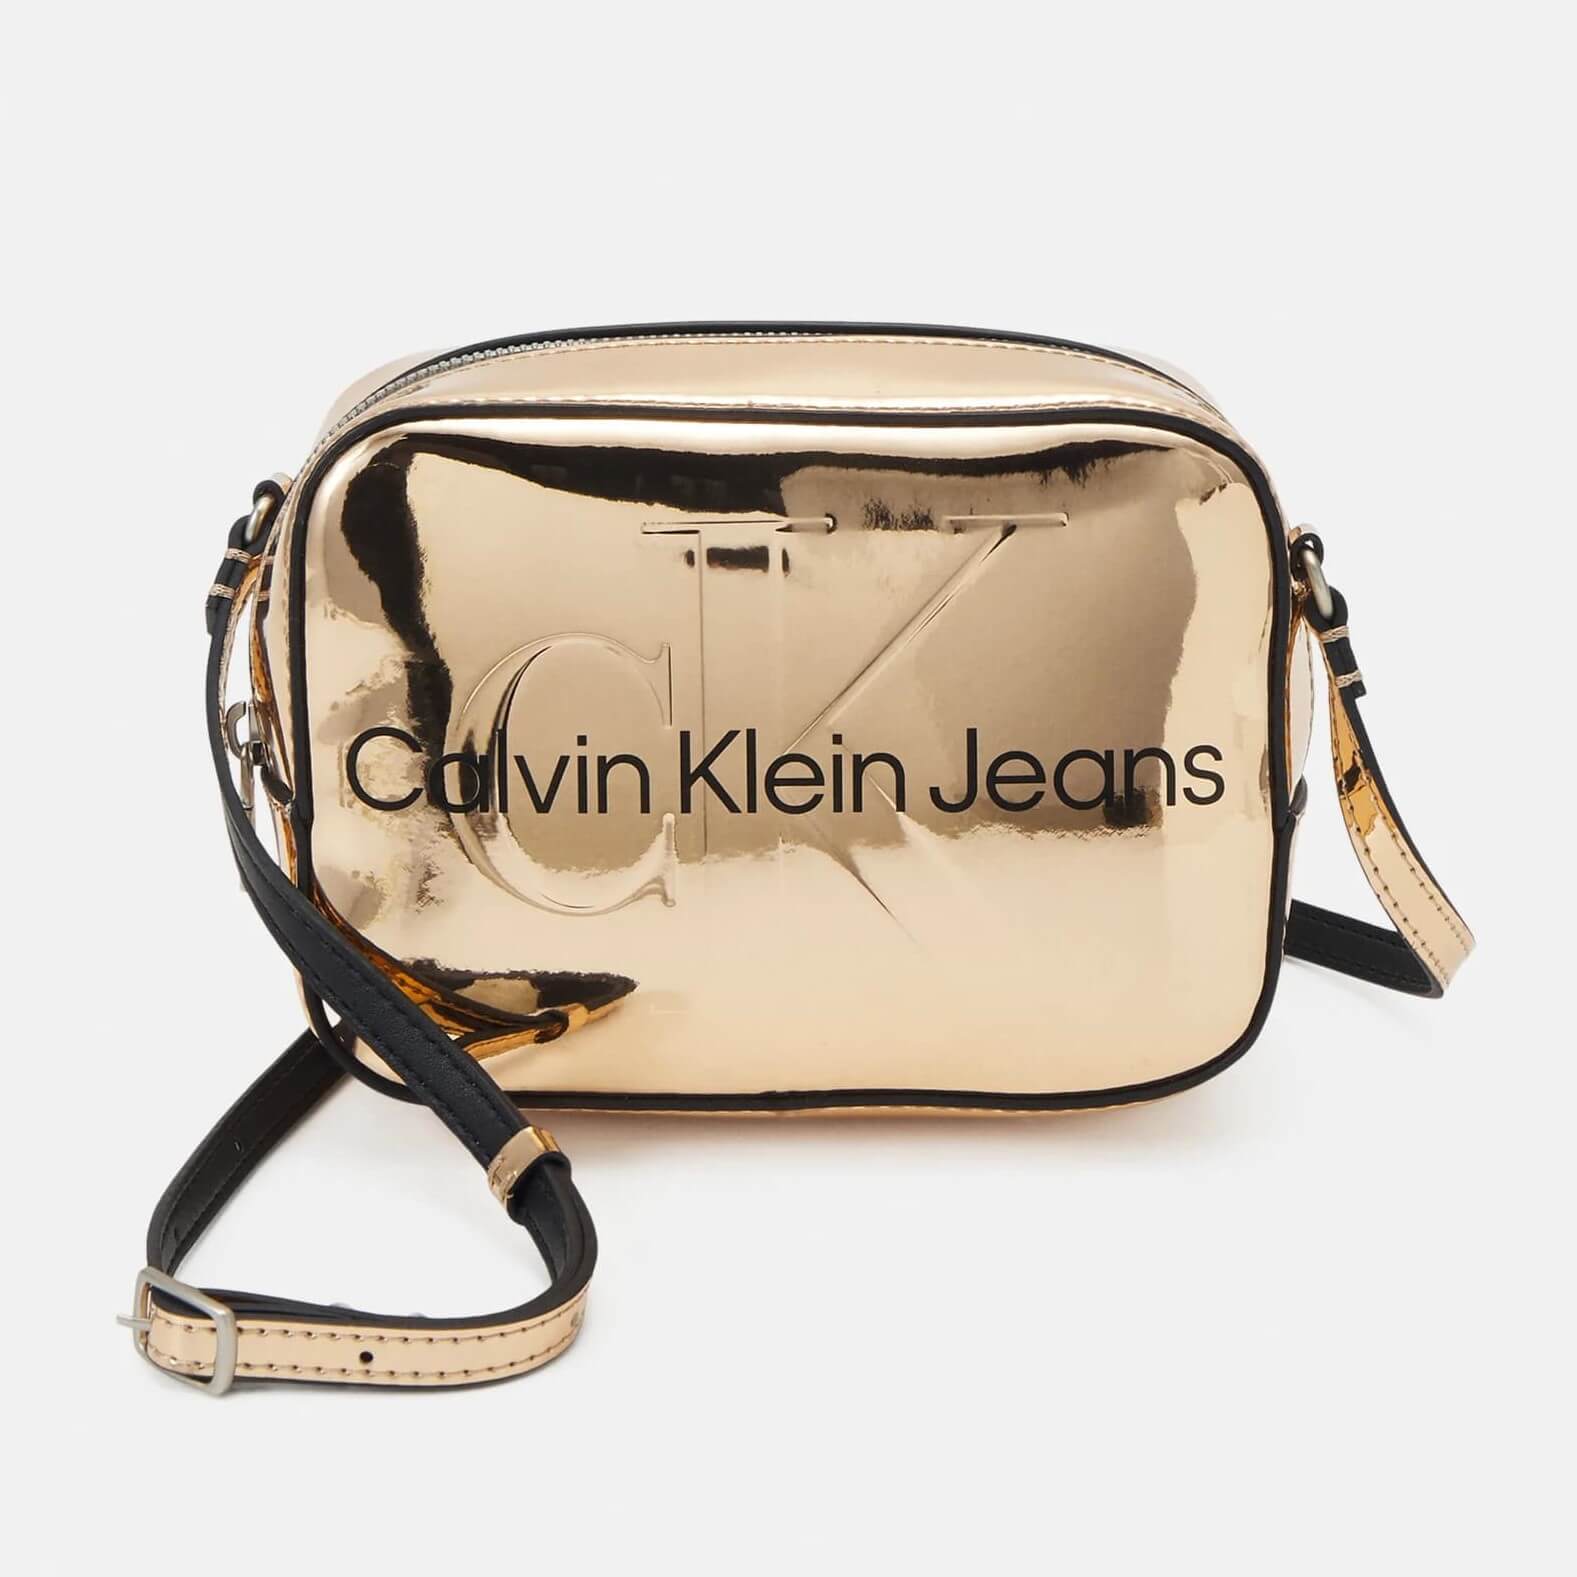 Сумка Calvin Klein Jeans Sculpted, золотой